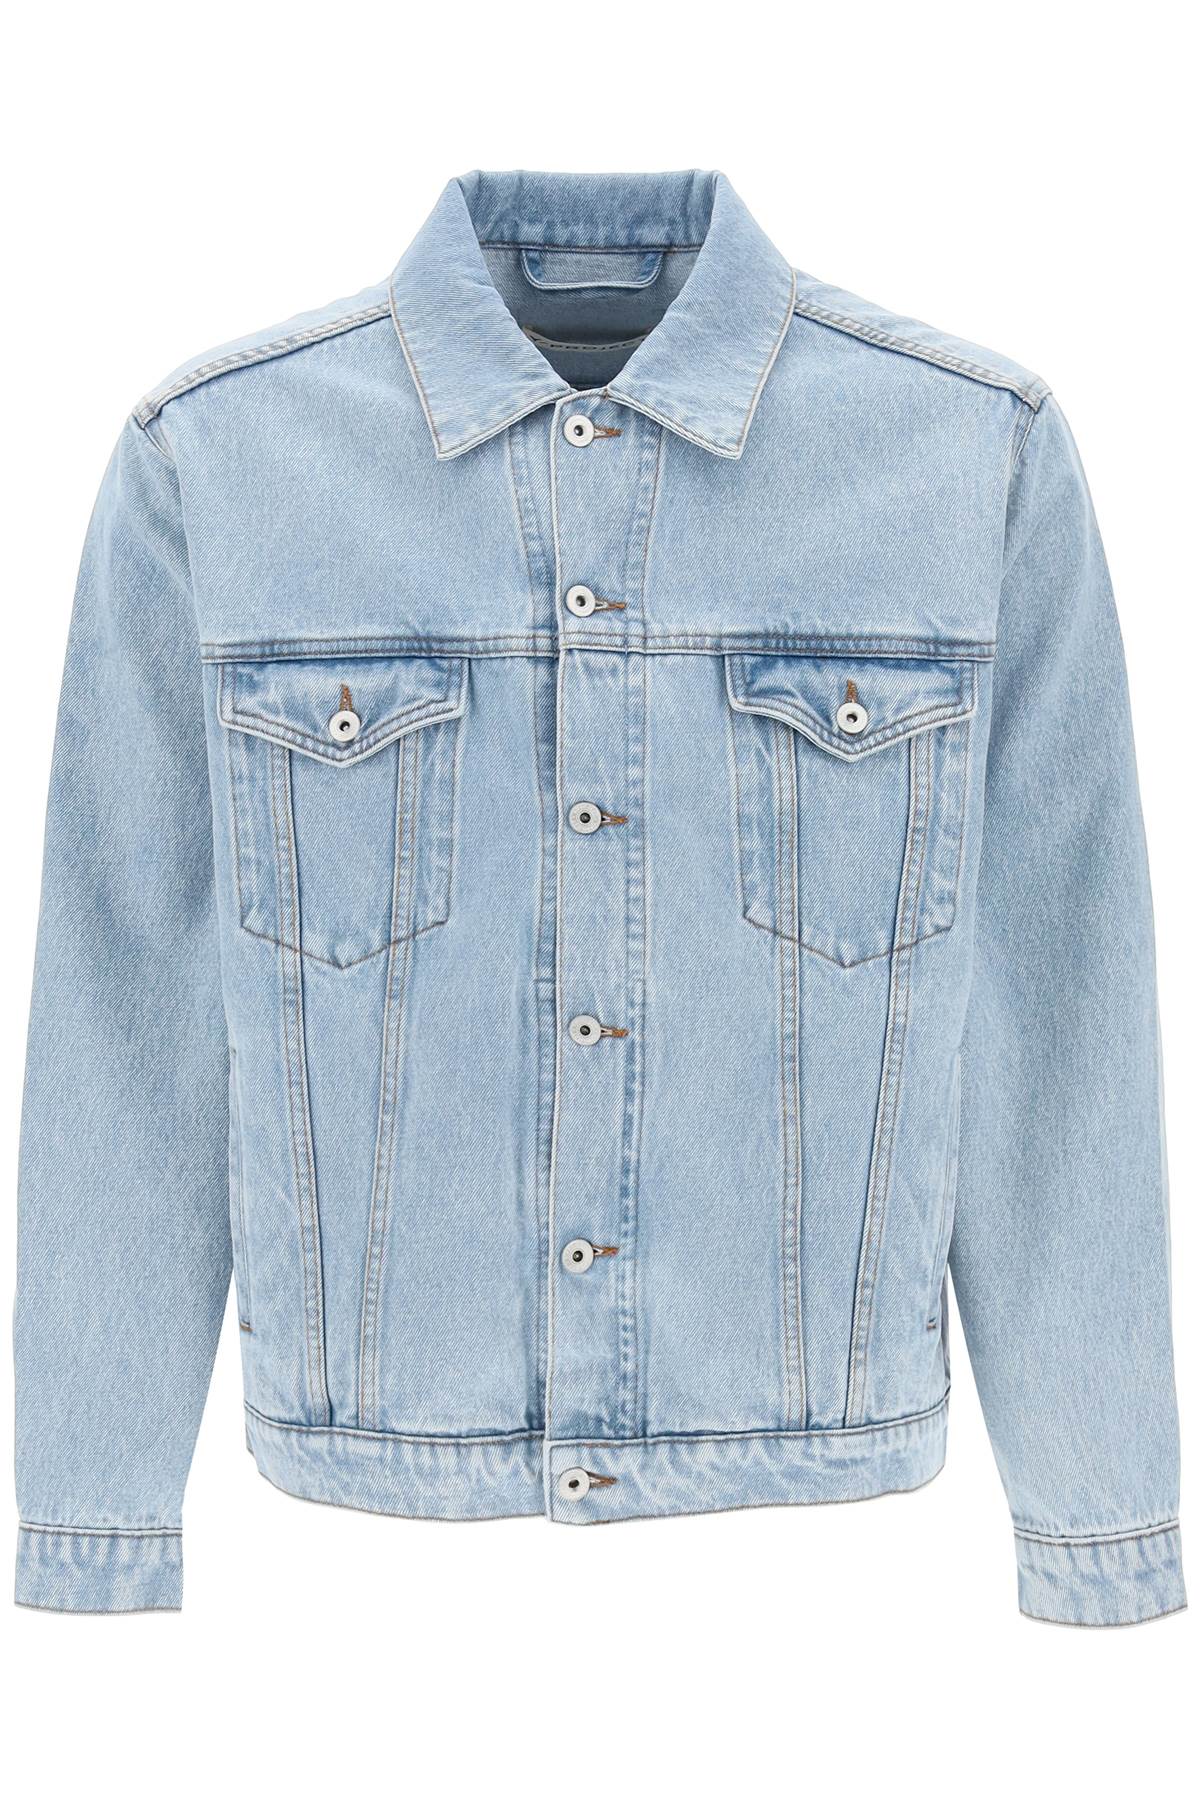 Y/PROJECT Organic Cotton Denim Jacket for Men and Women - Light Blue